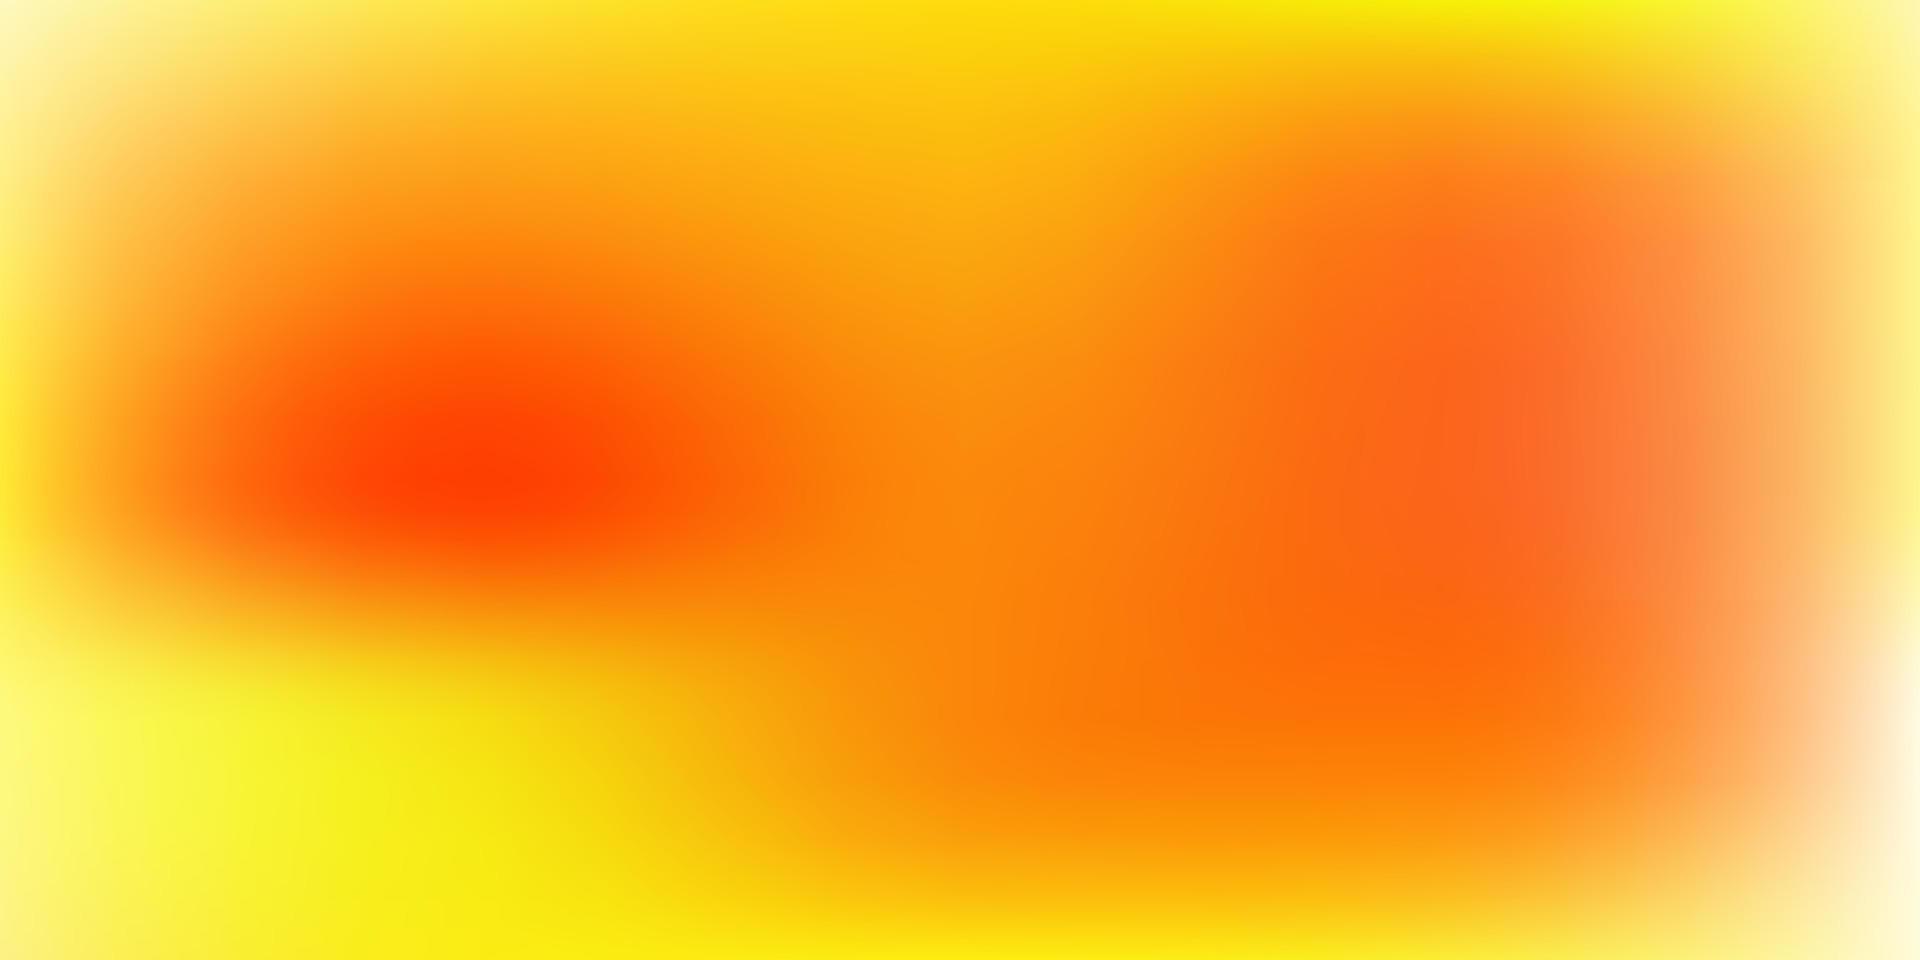 ljus orange vektor gradient oskärpa bakgrund.